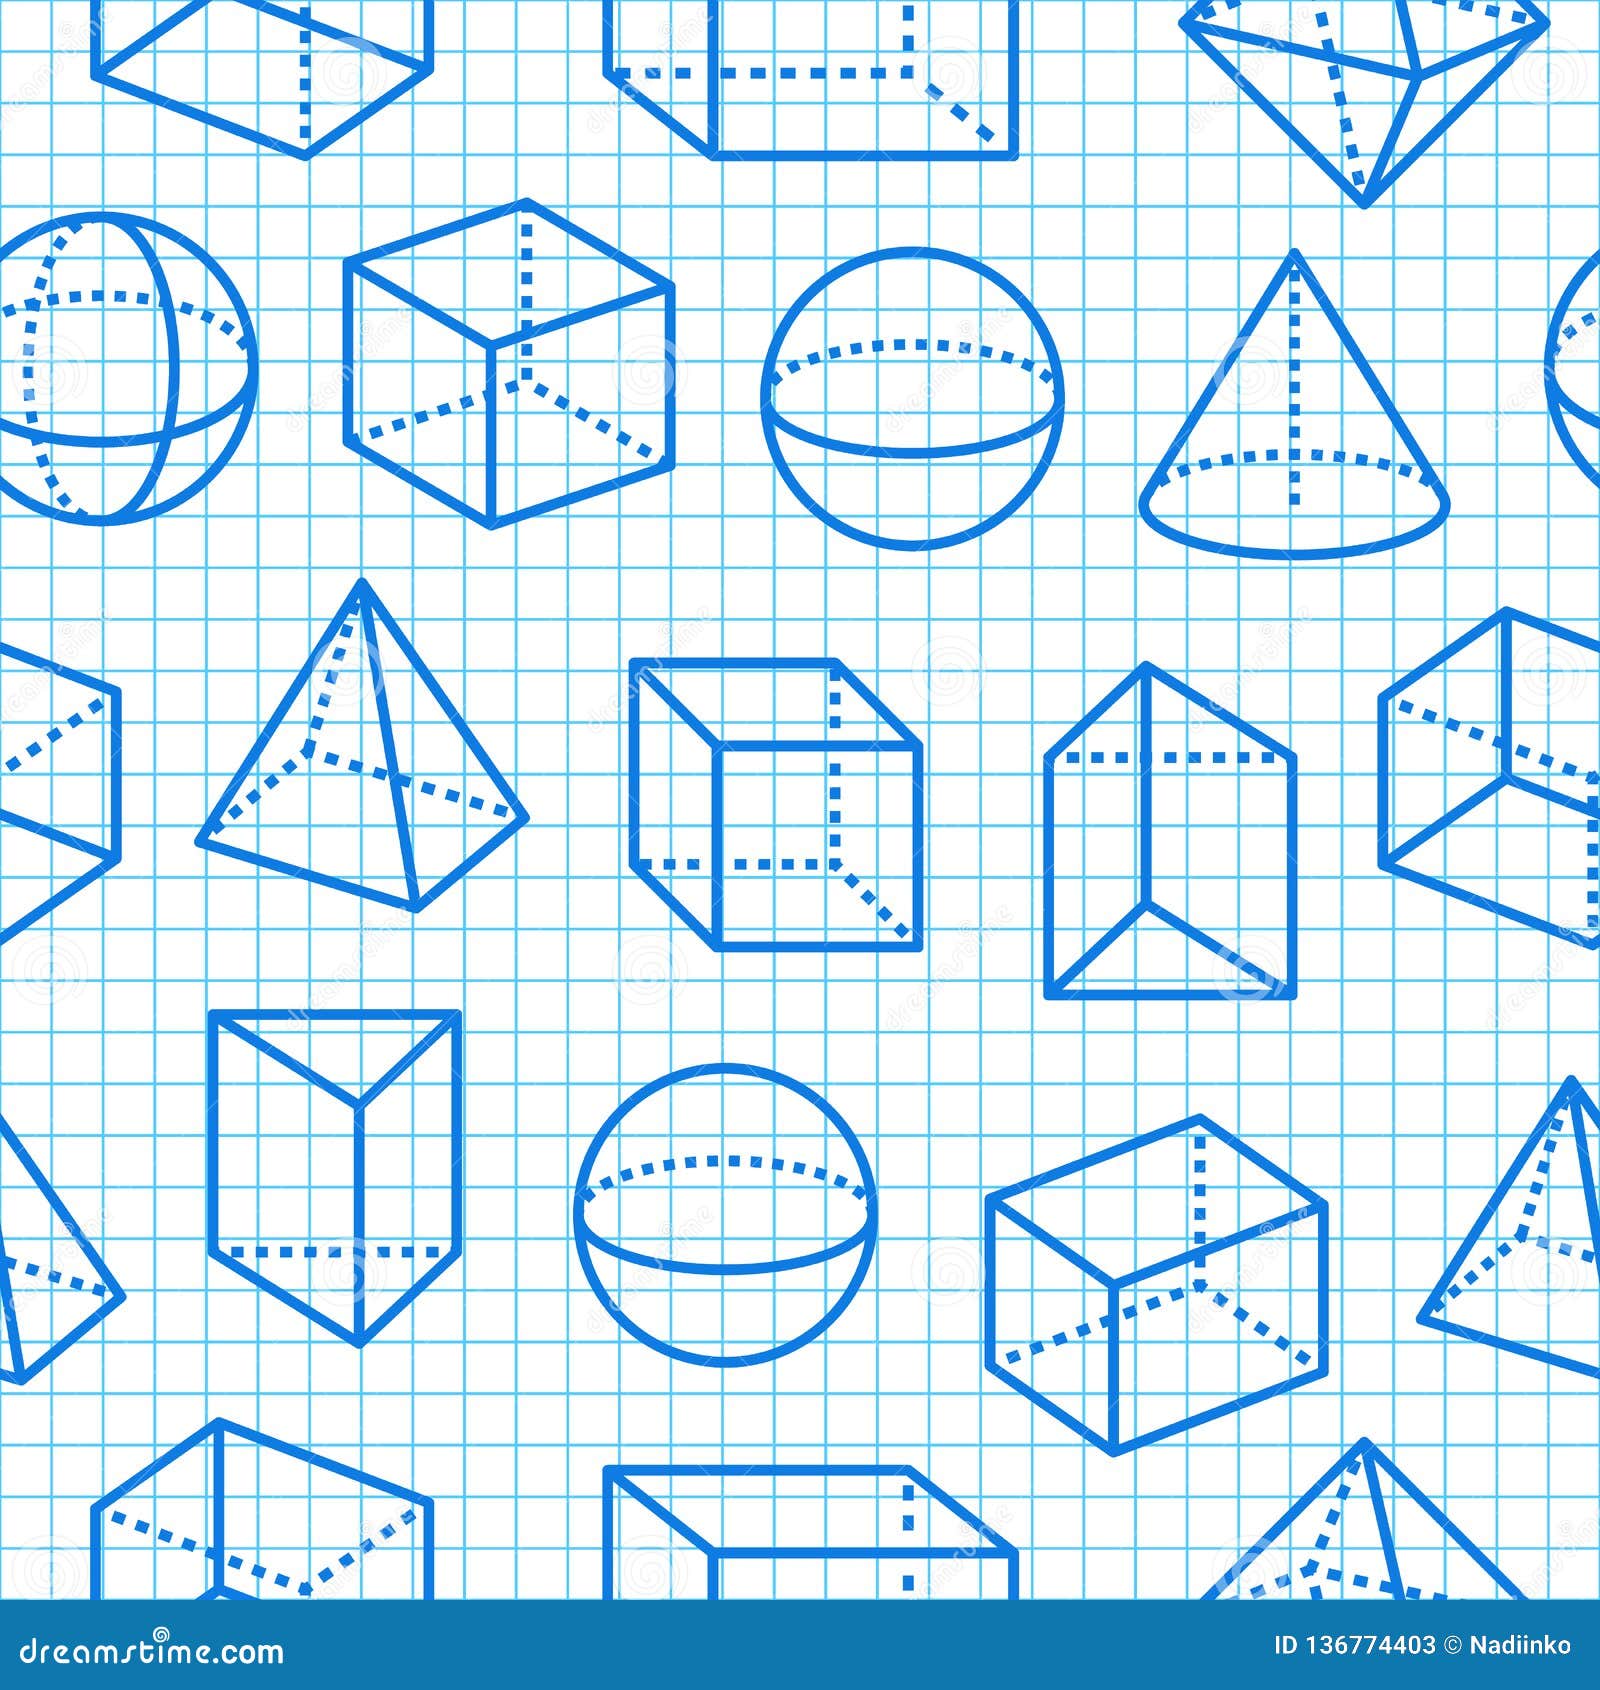 geometric s seamless pattern flat line icons. modern abstract background for geometry, math education. mathematics